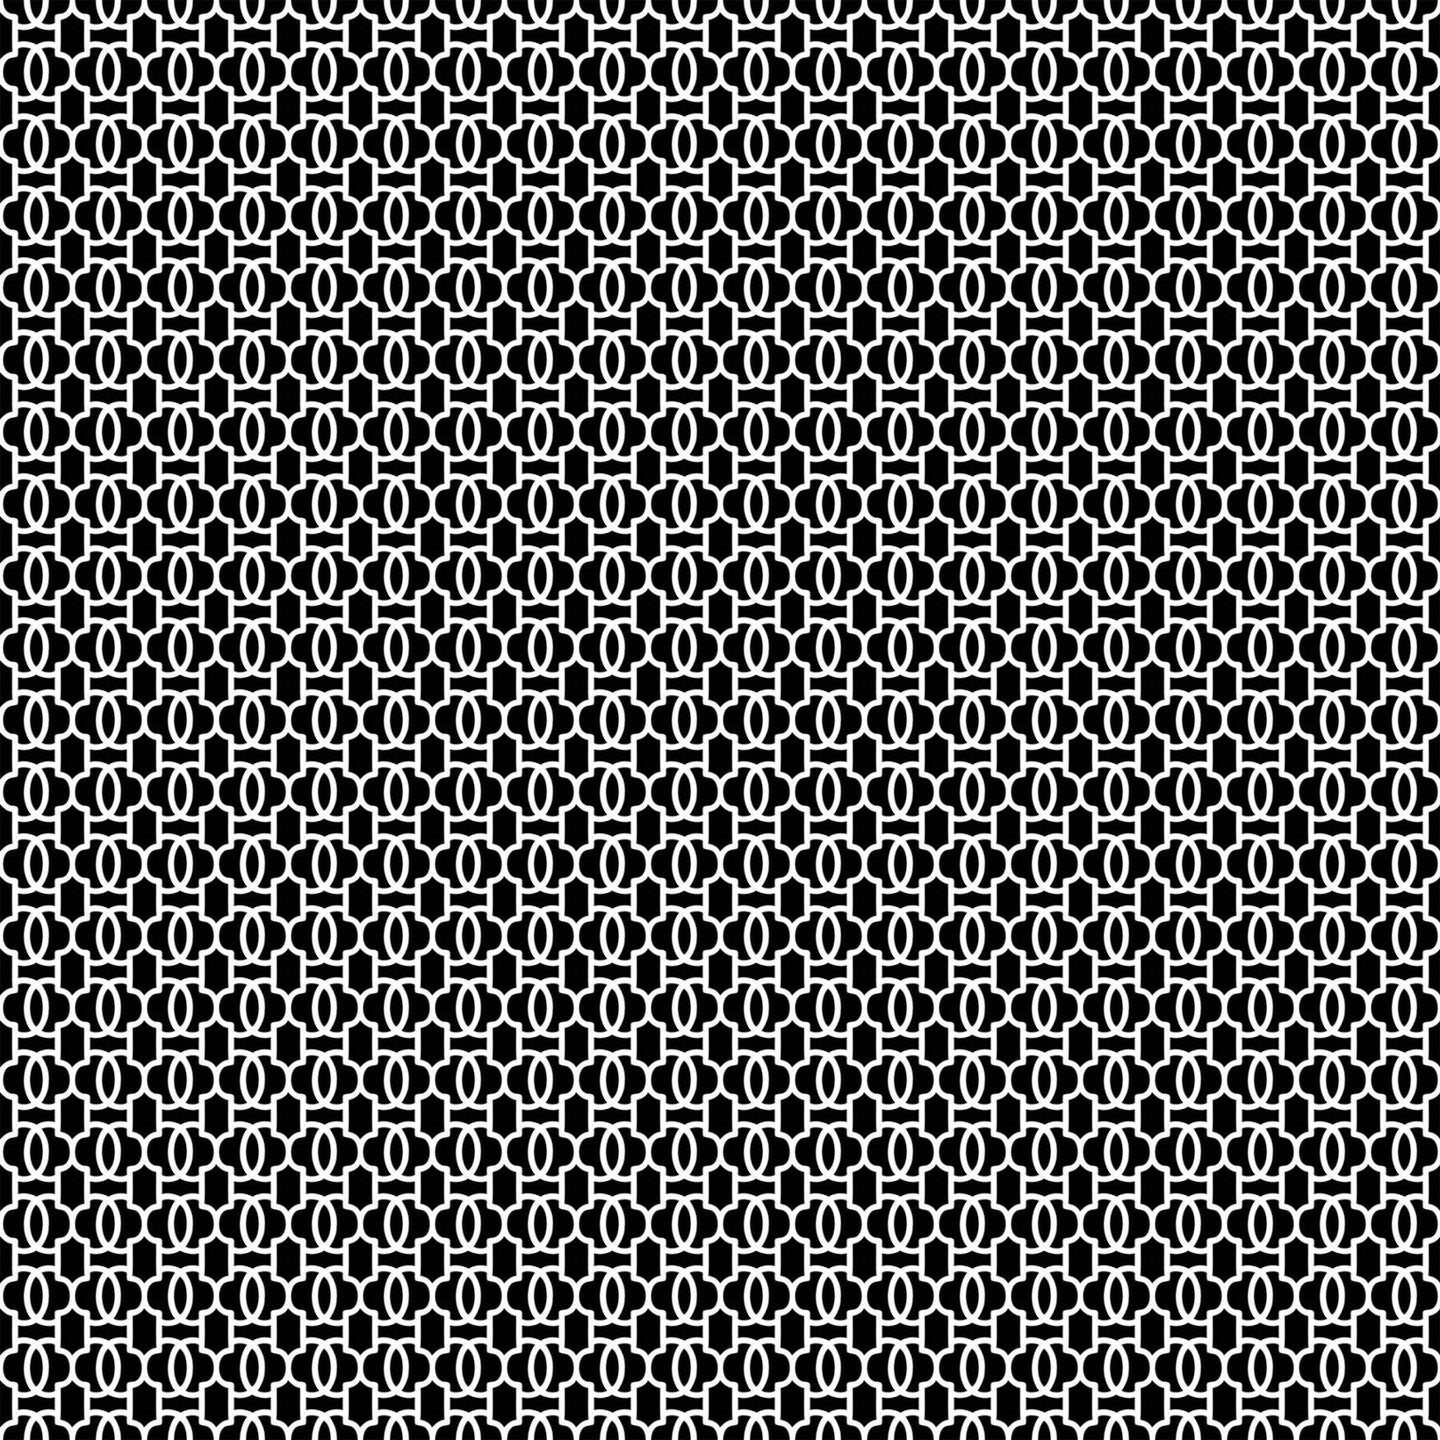 Blush Sateen Stripe - Grid Black